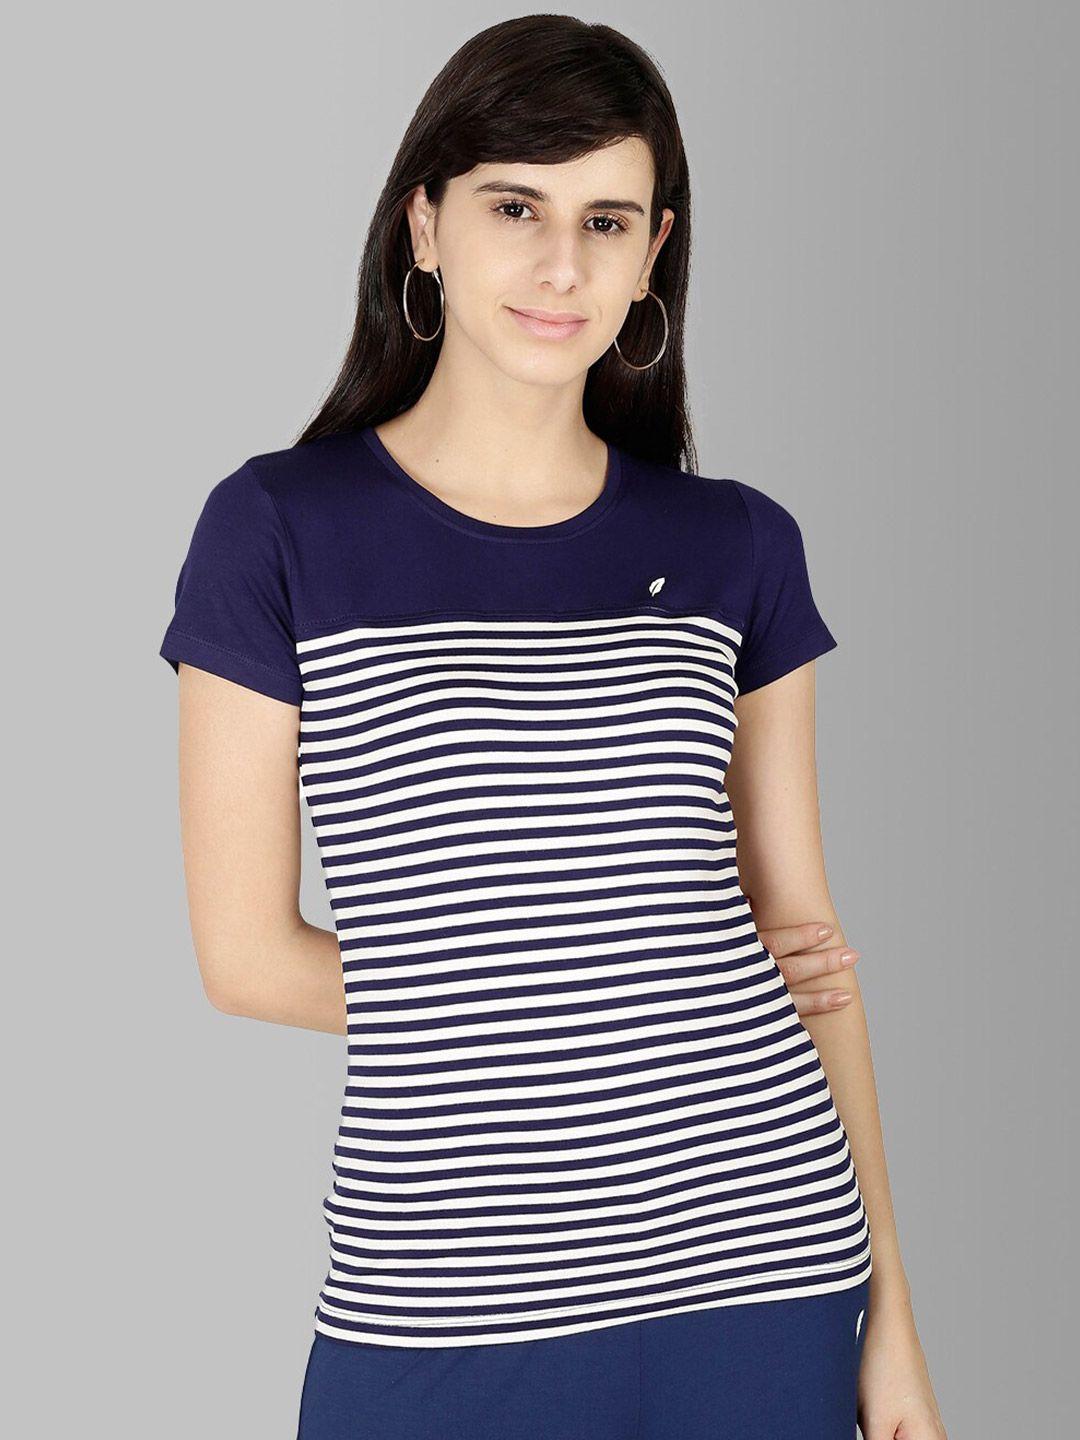 feather soft elite women navy blue & white striped stretchex slim fit t-shirt